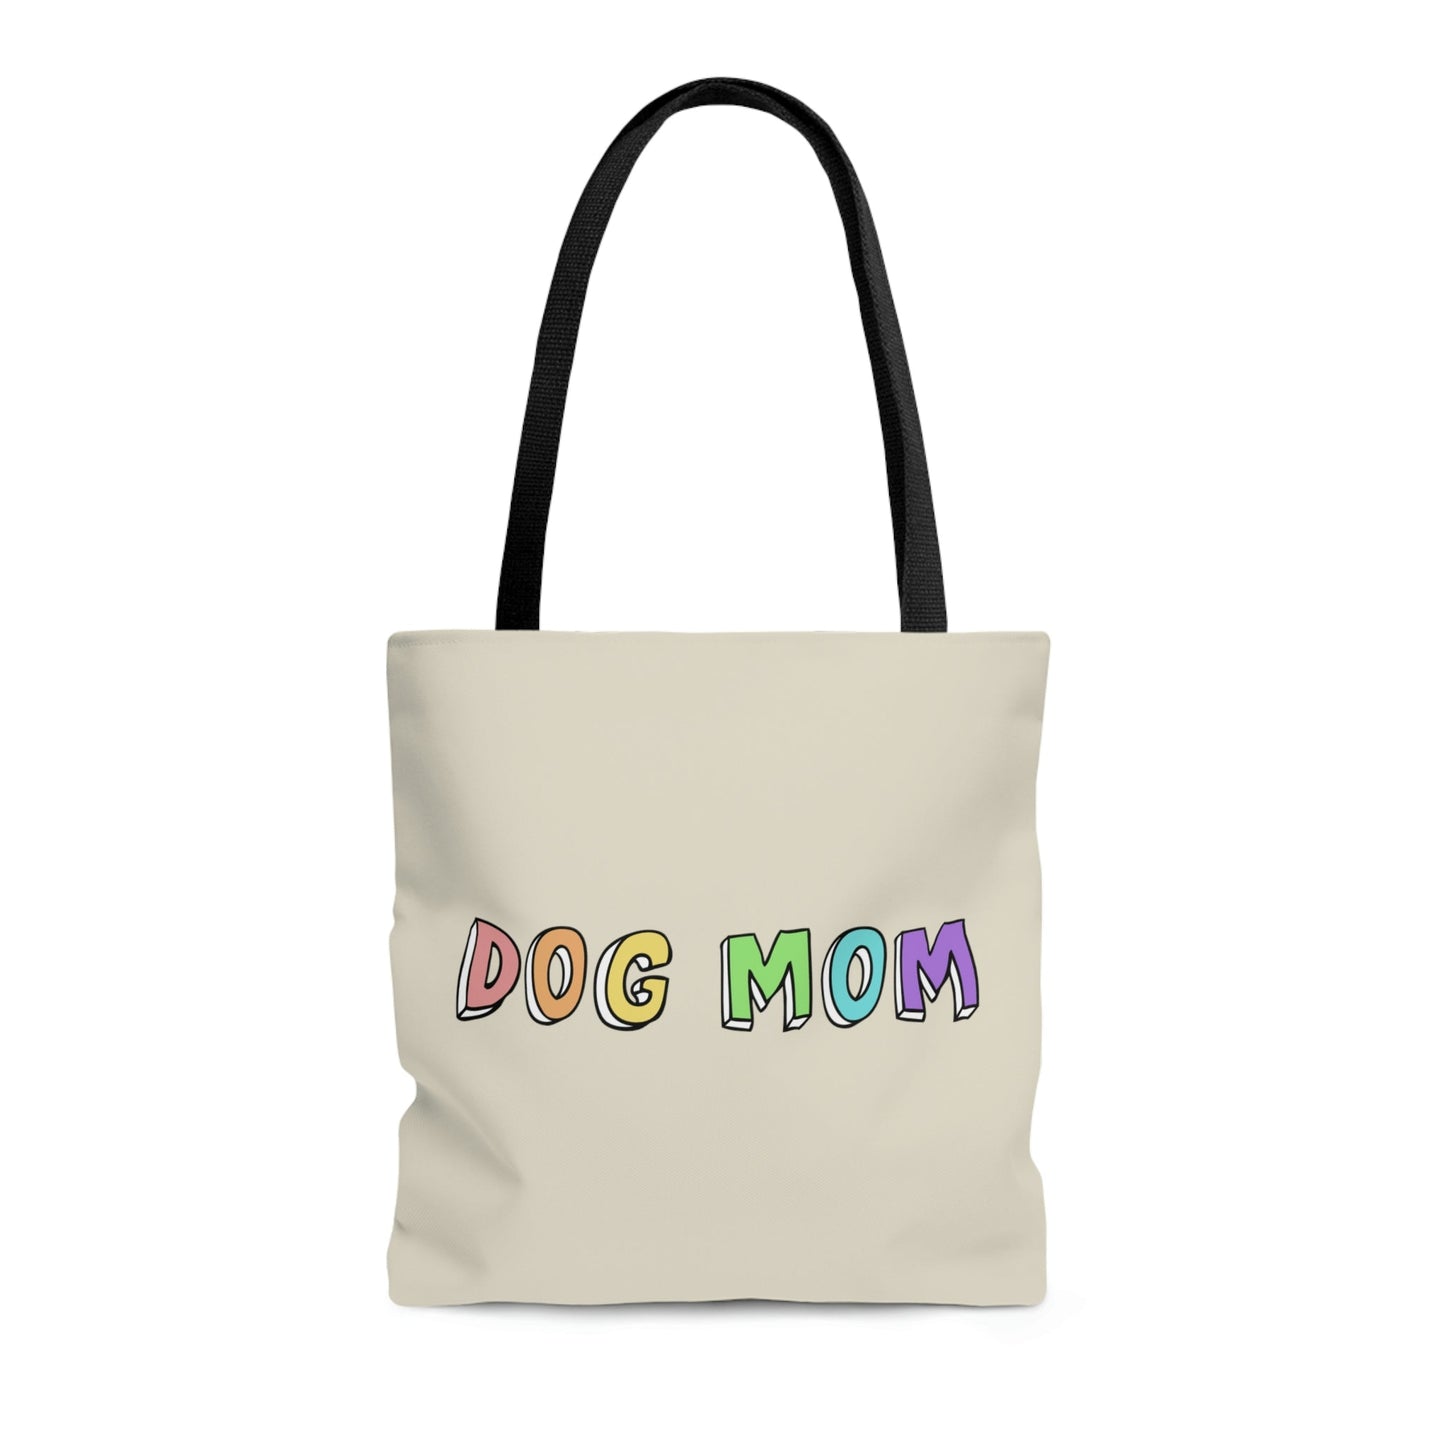 Dog Mom | Tote Bag - Detezi Designs-13508483572629437466